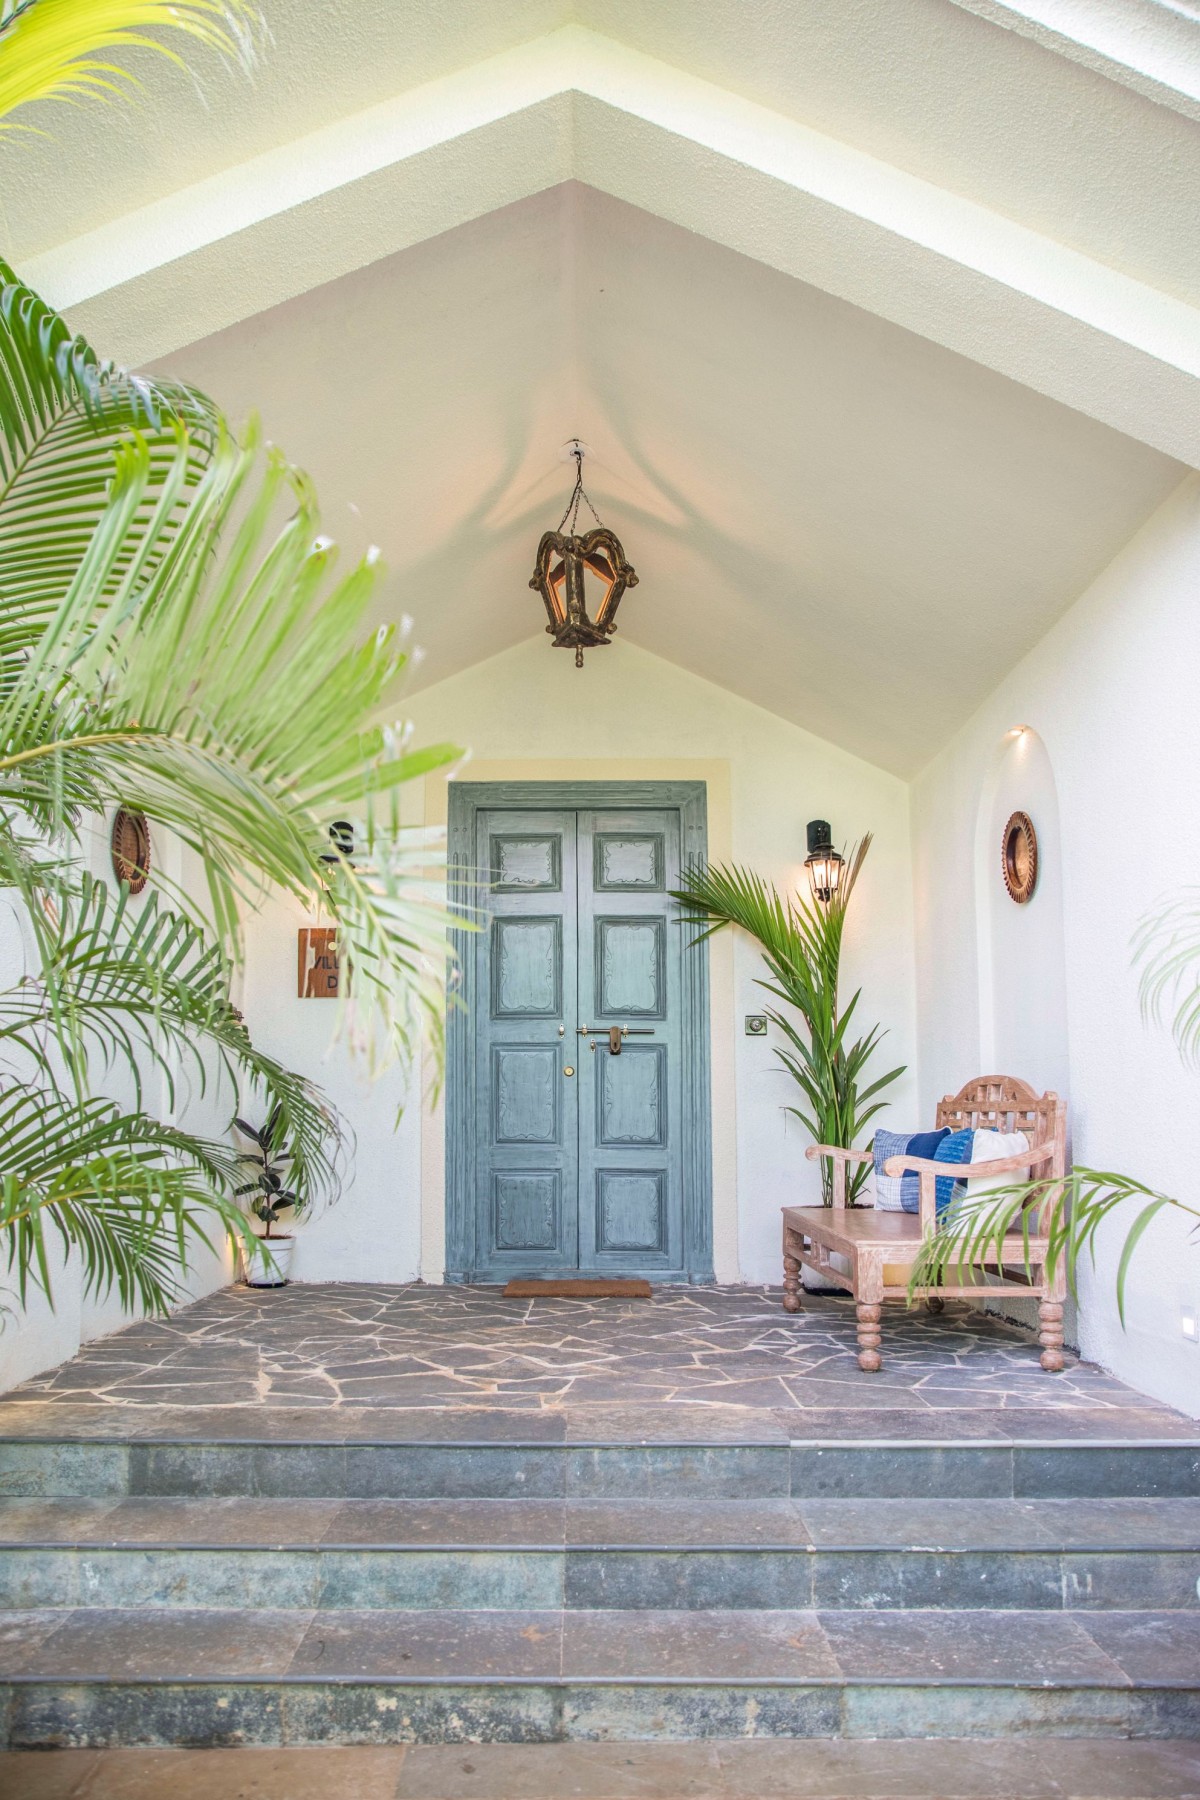 A distinctive blue door welcomes you inside the villa